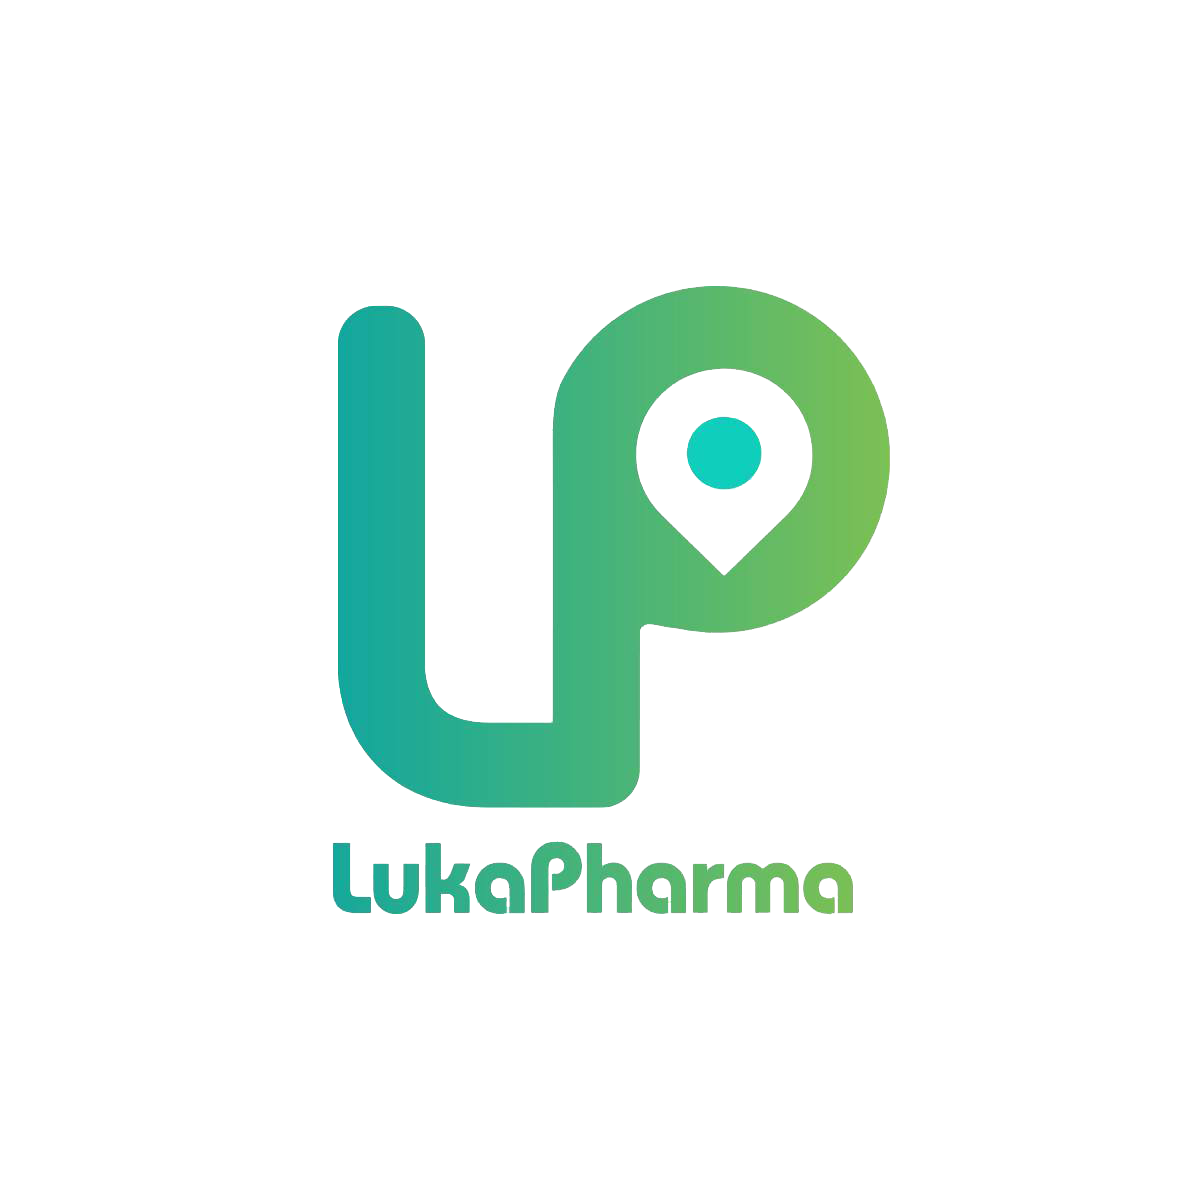 Luka Pharma company logo